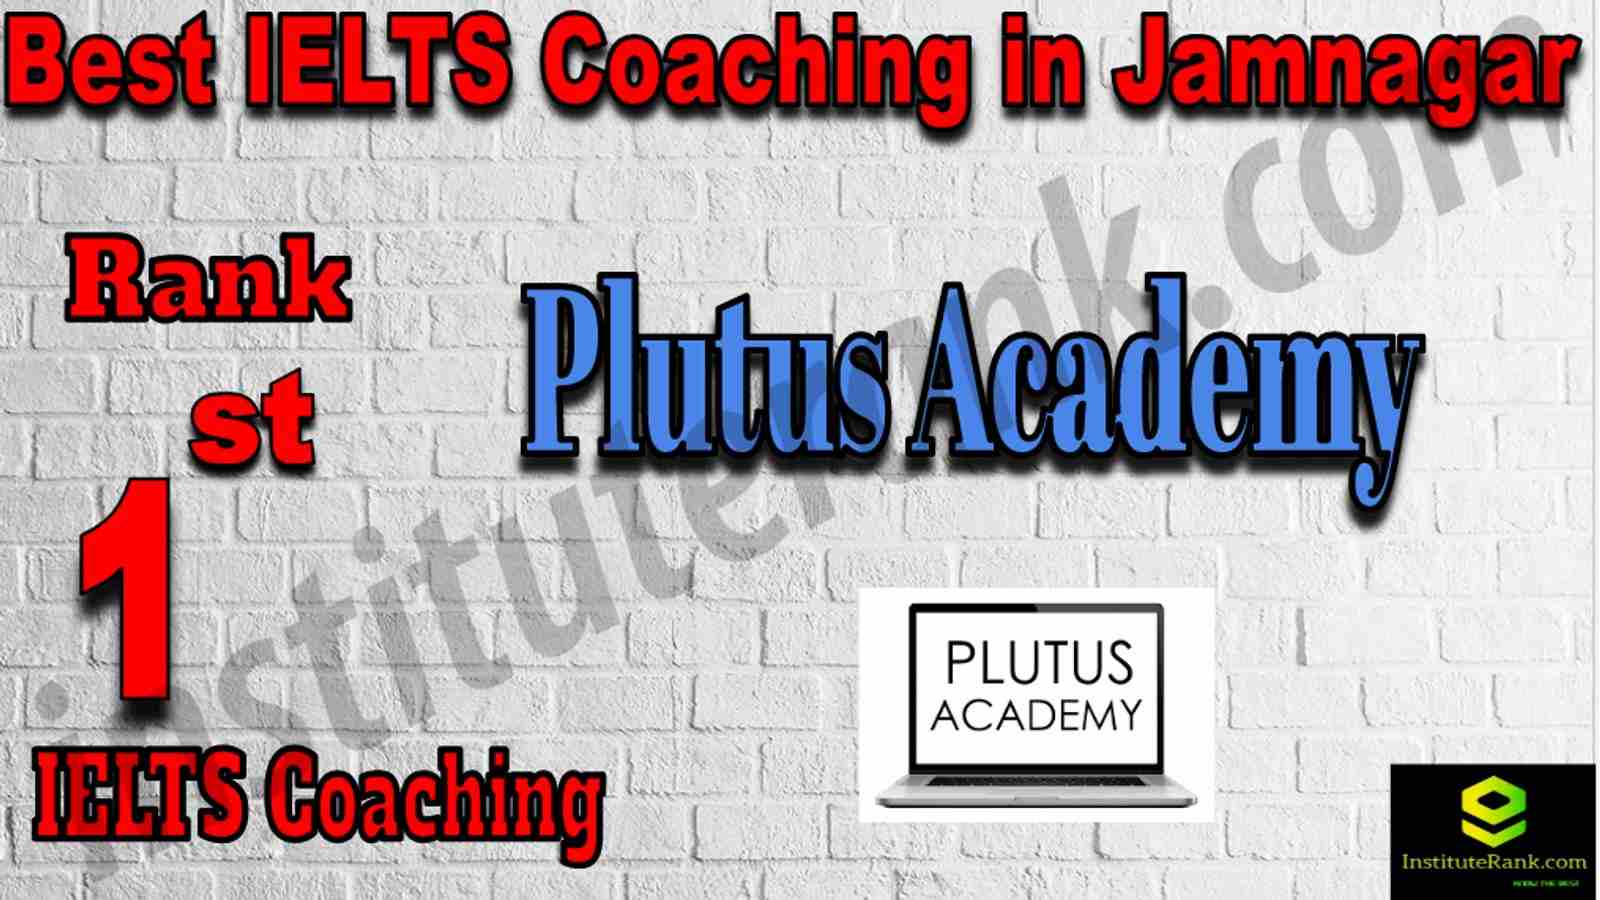 1st Best IELTS Coaching in Jamnagar